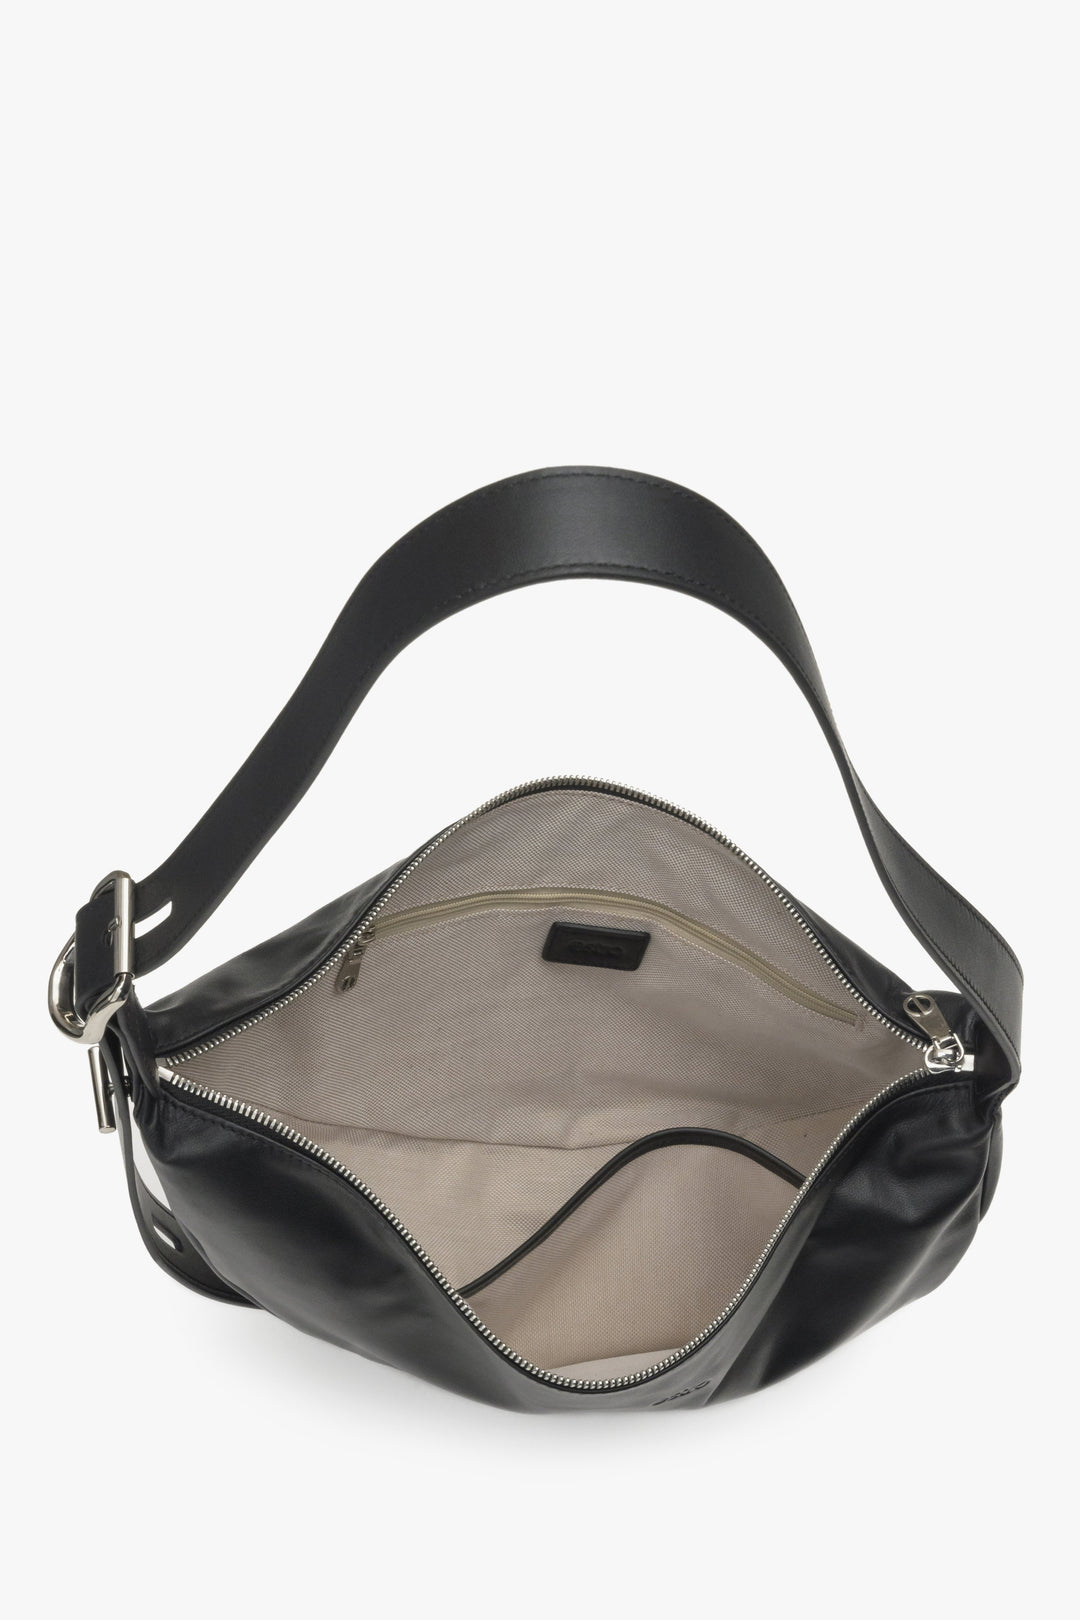 Women's black leather Estro shoulder bag - close-up on the interior of the model.